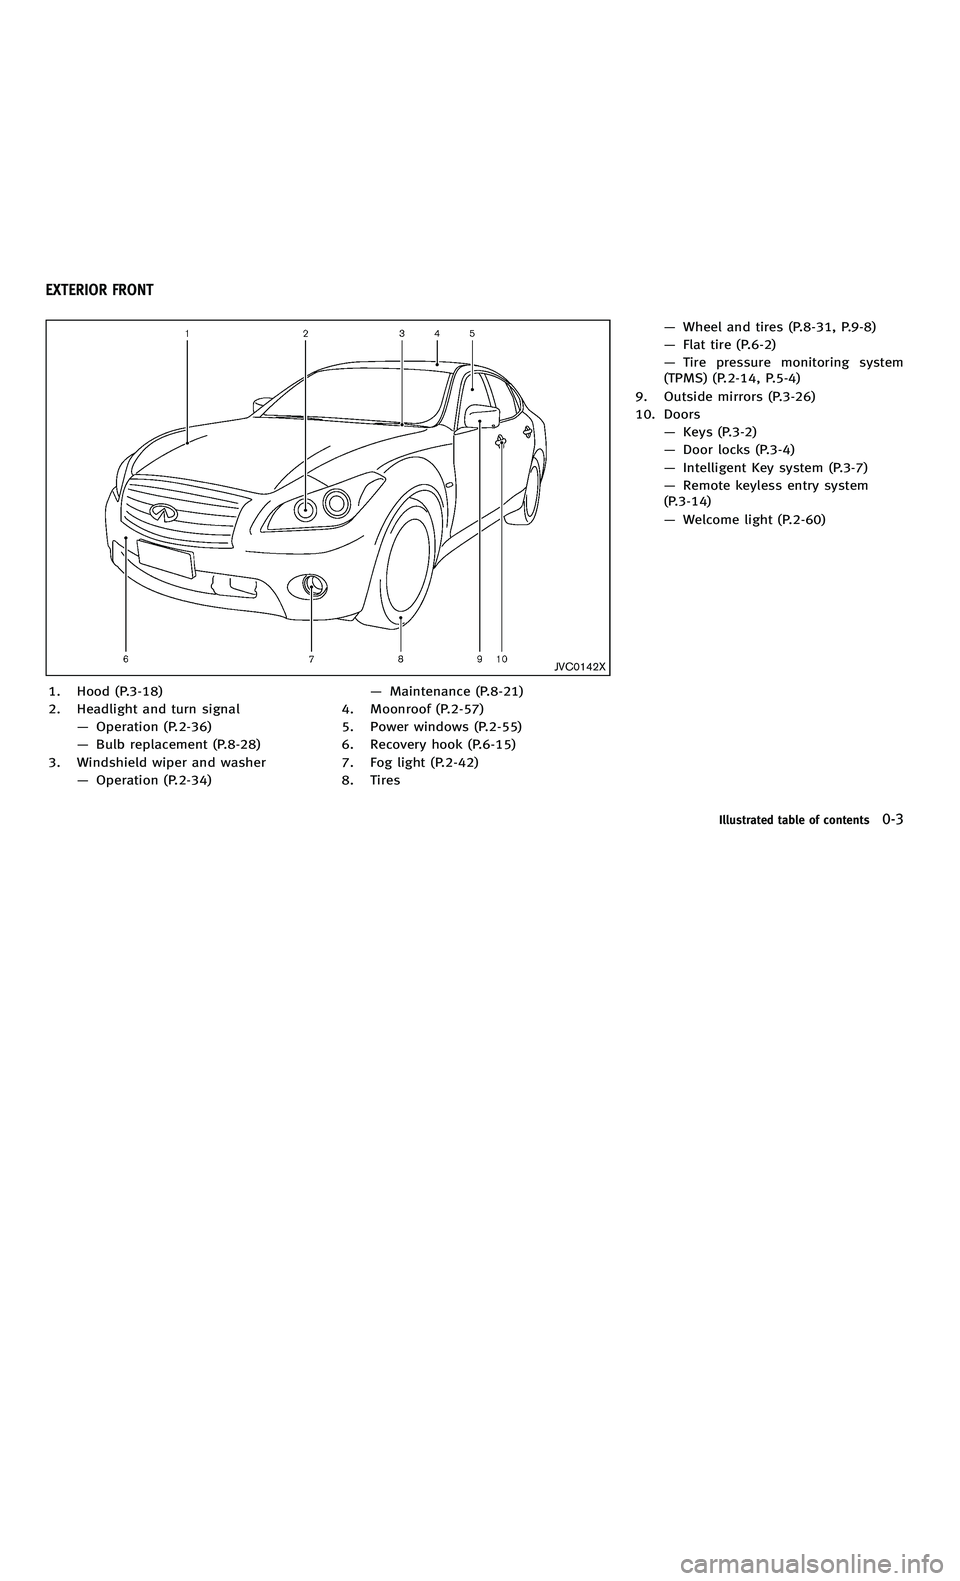 INFINITI M-HEV 2012  Owners Manual 858763.psp Nissan Infiniti OM OM2E HY51U0 Hybrid 1" gutter 12/21/2010 14\
:36:44 12 A
JVC0142X
1. Hood (P.3-18)
2. Headlight and turn signal—Operation (P.2-36)
— Bulb replacement (P.8-28)
3. Winds